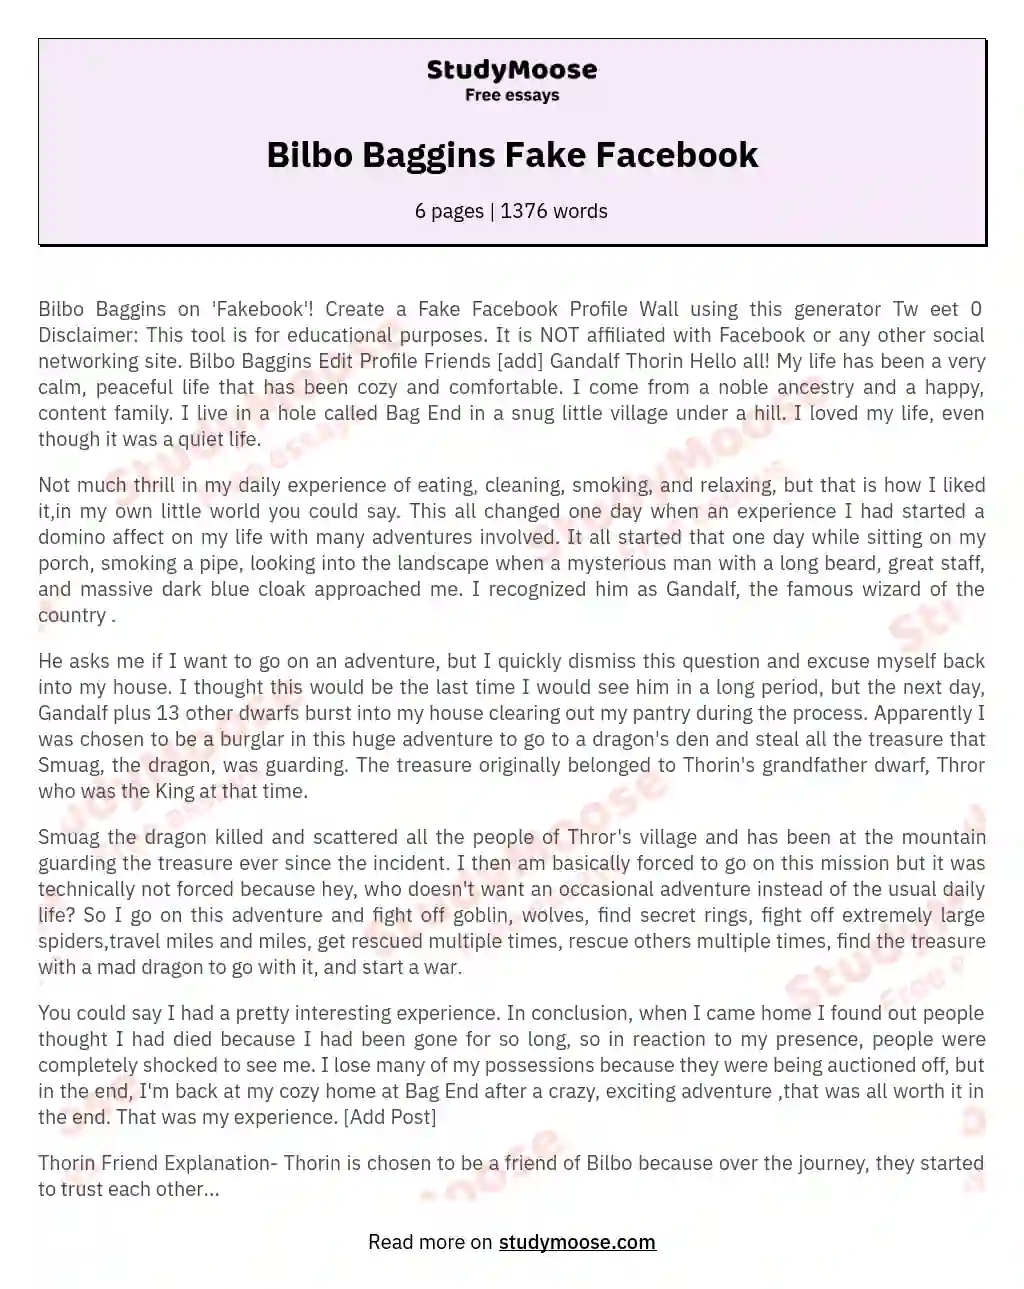 Bilbo Baggins Fake Facebook essay